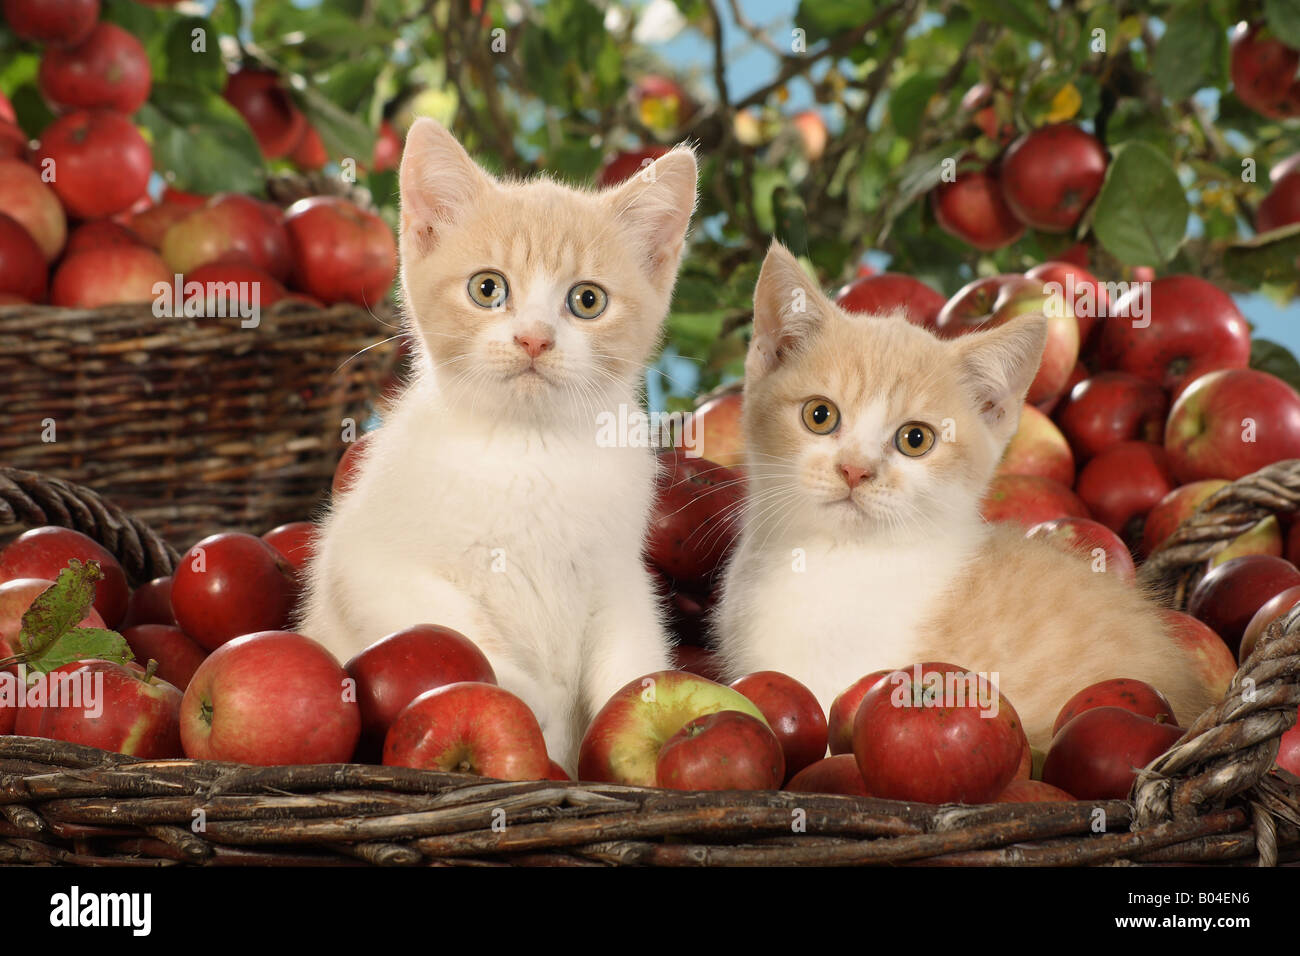 two British Shorthair kittens in basket between apples Stock Photo